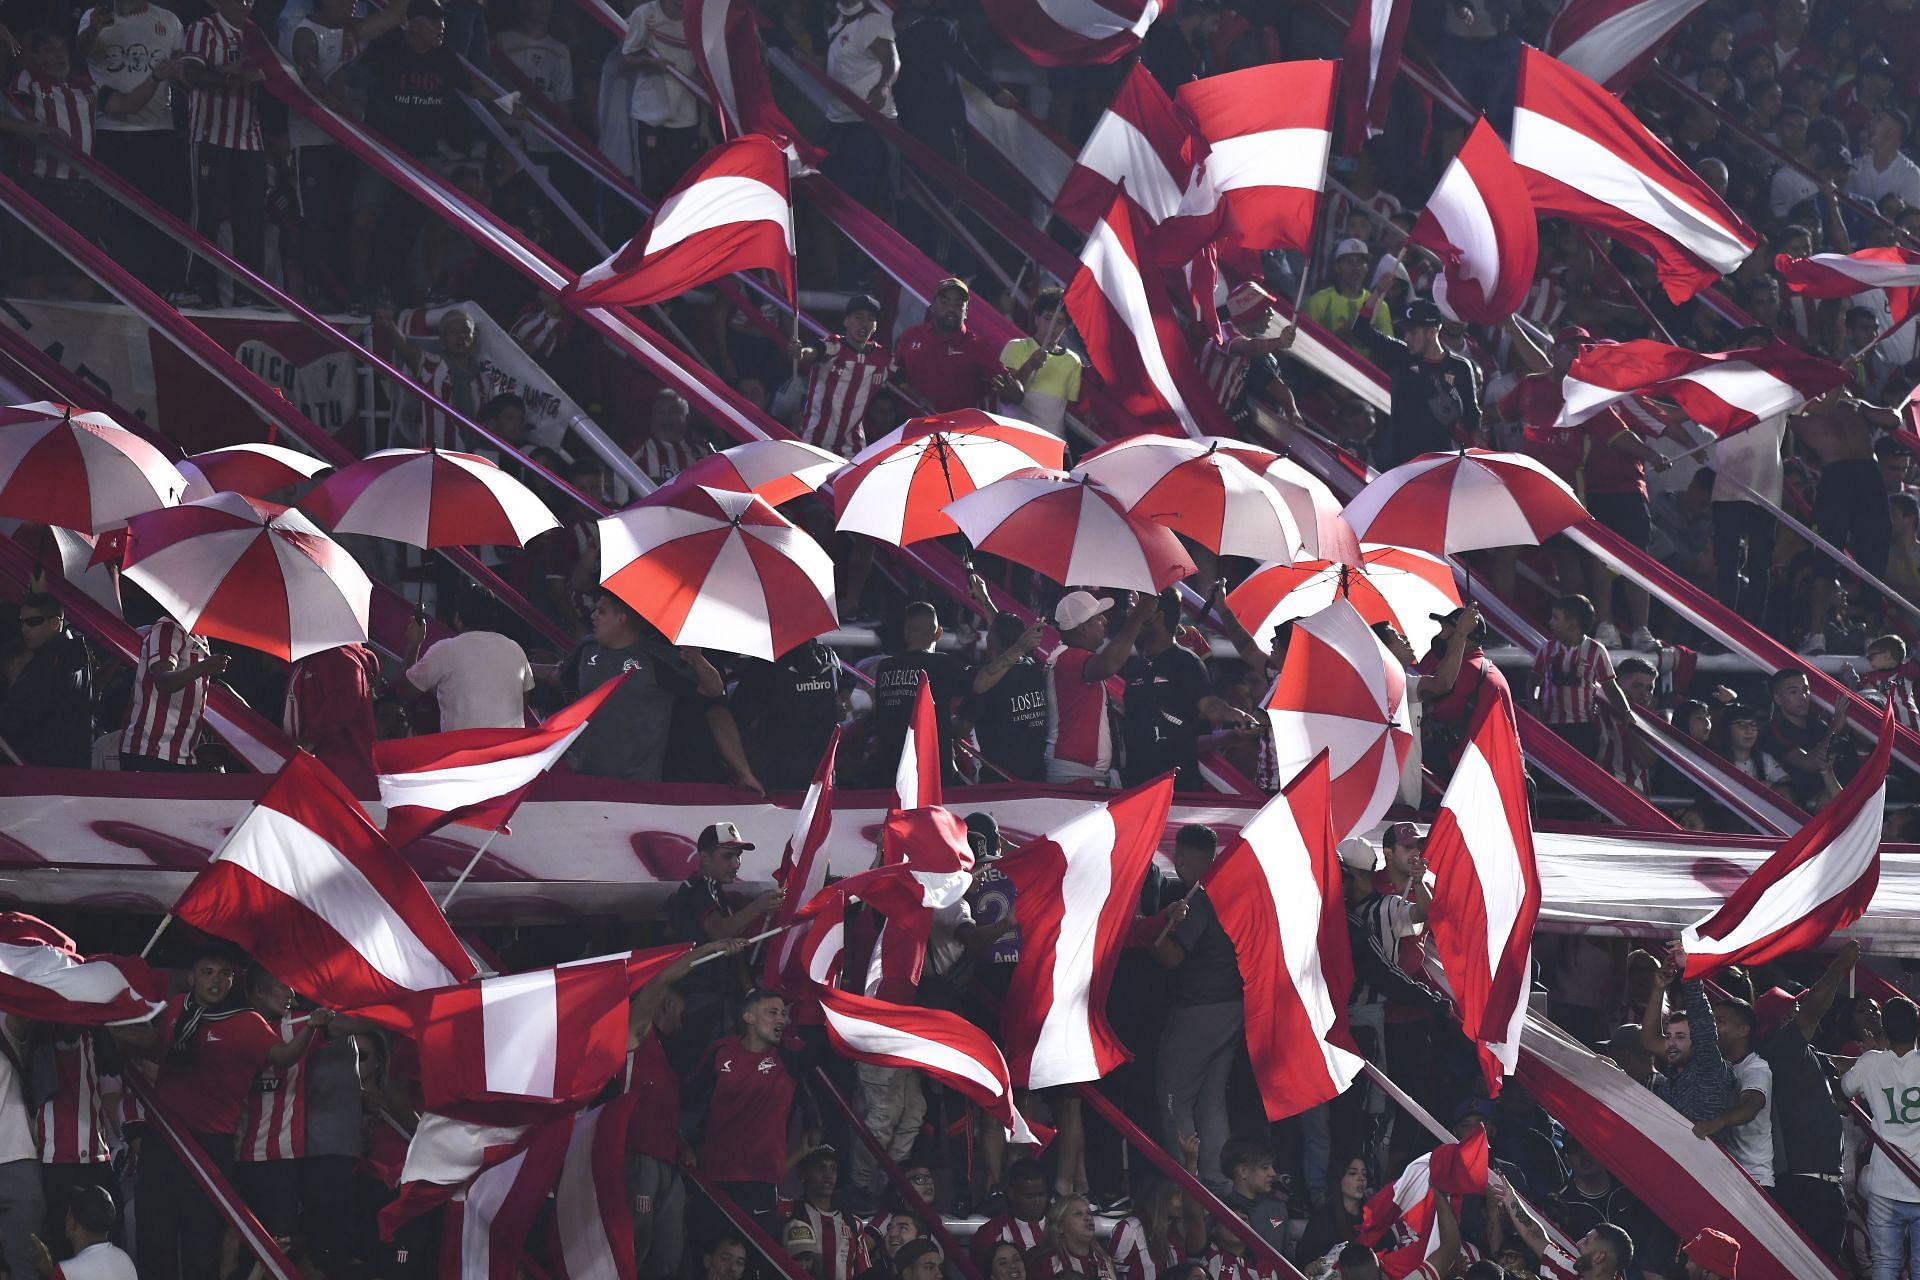 Estudiantes will host Nacional on Wednesday - Copa Libertadores 2022